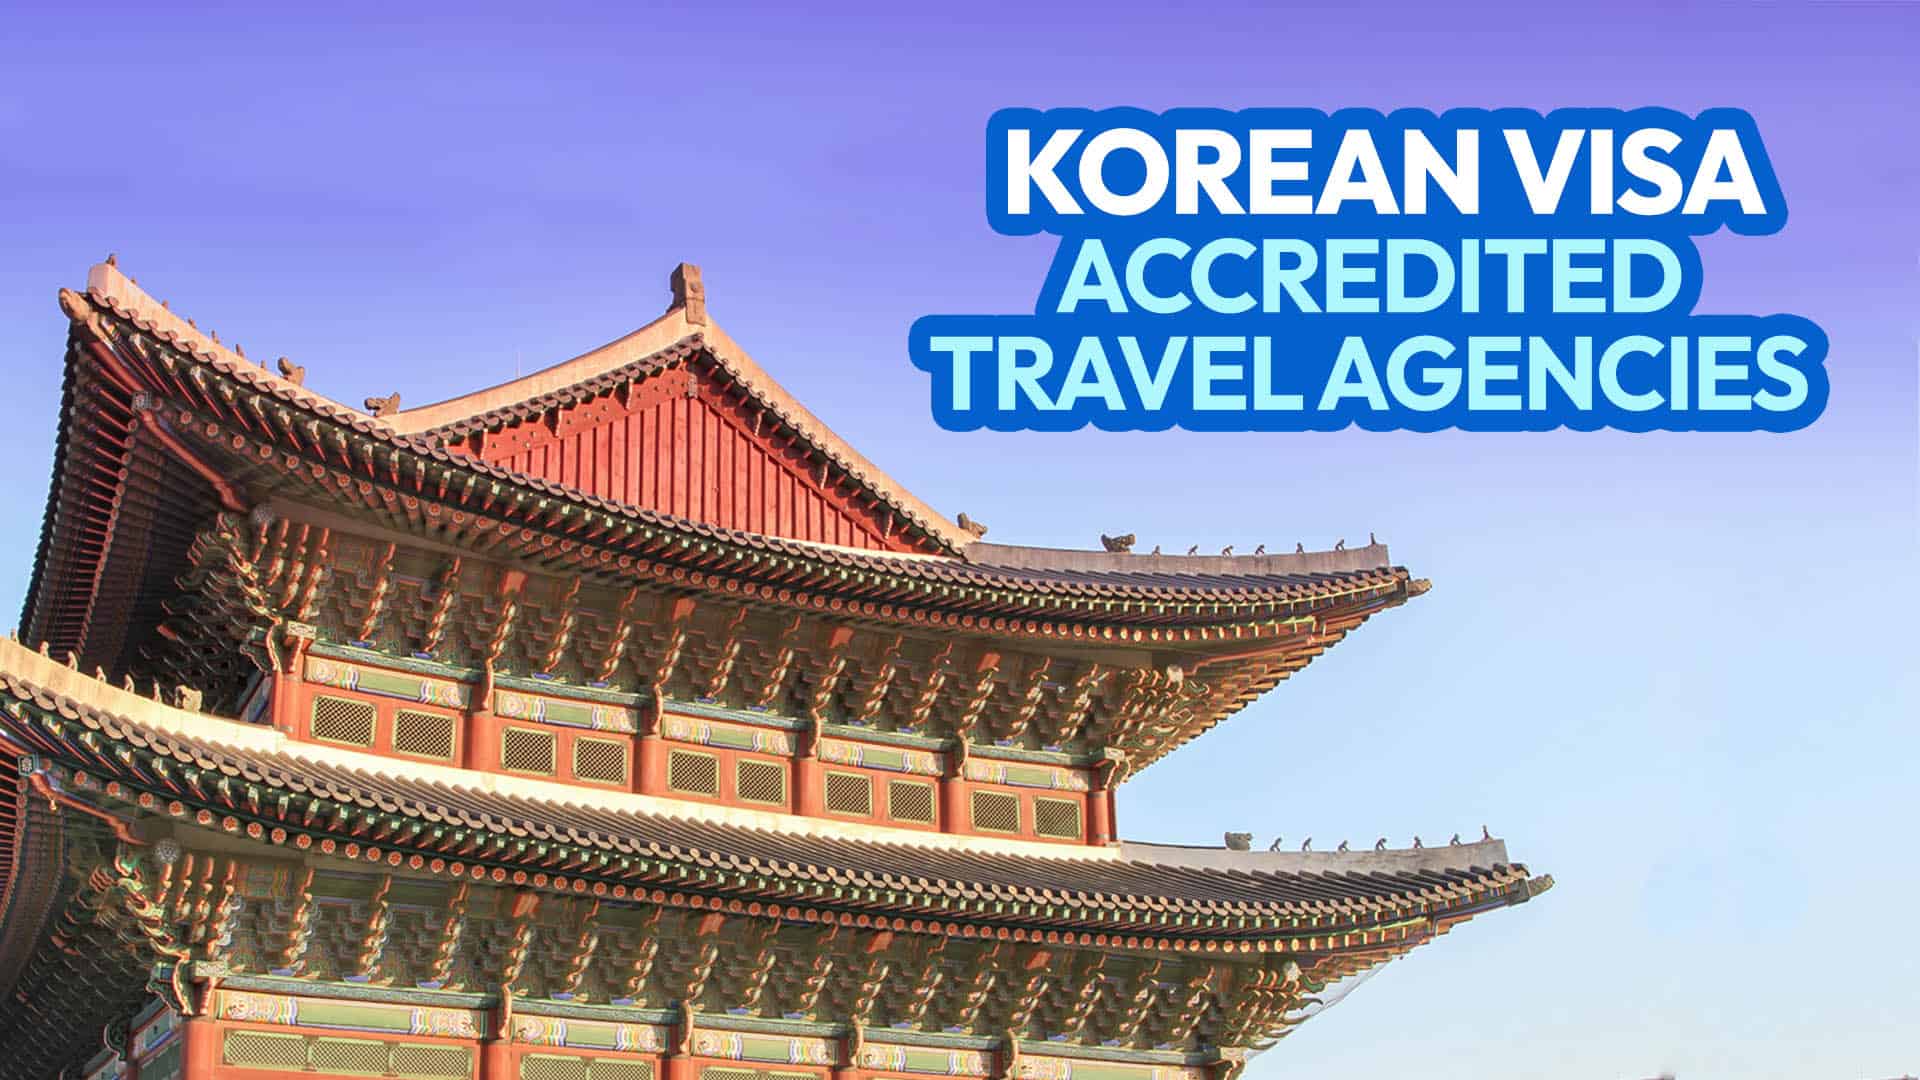 List of Accredited Travel Agencies for KOREAN VISA Application